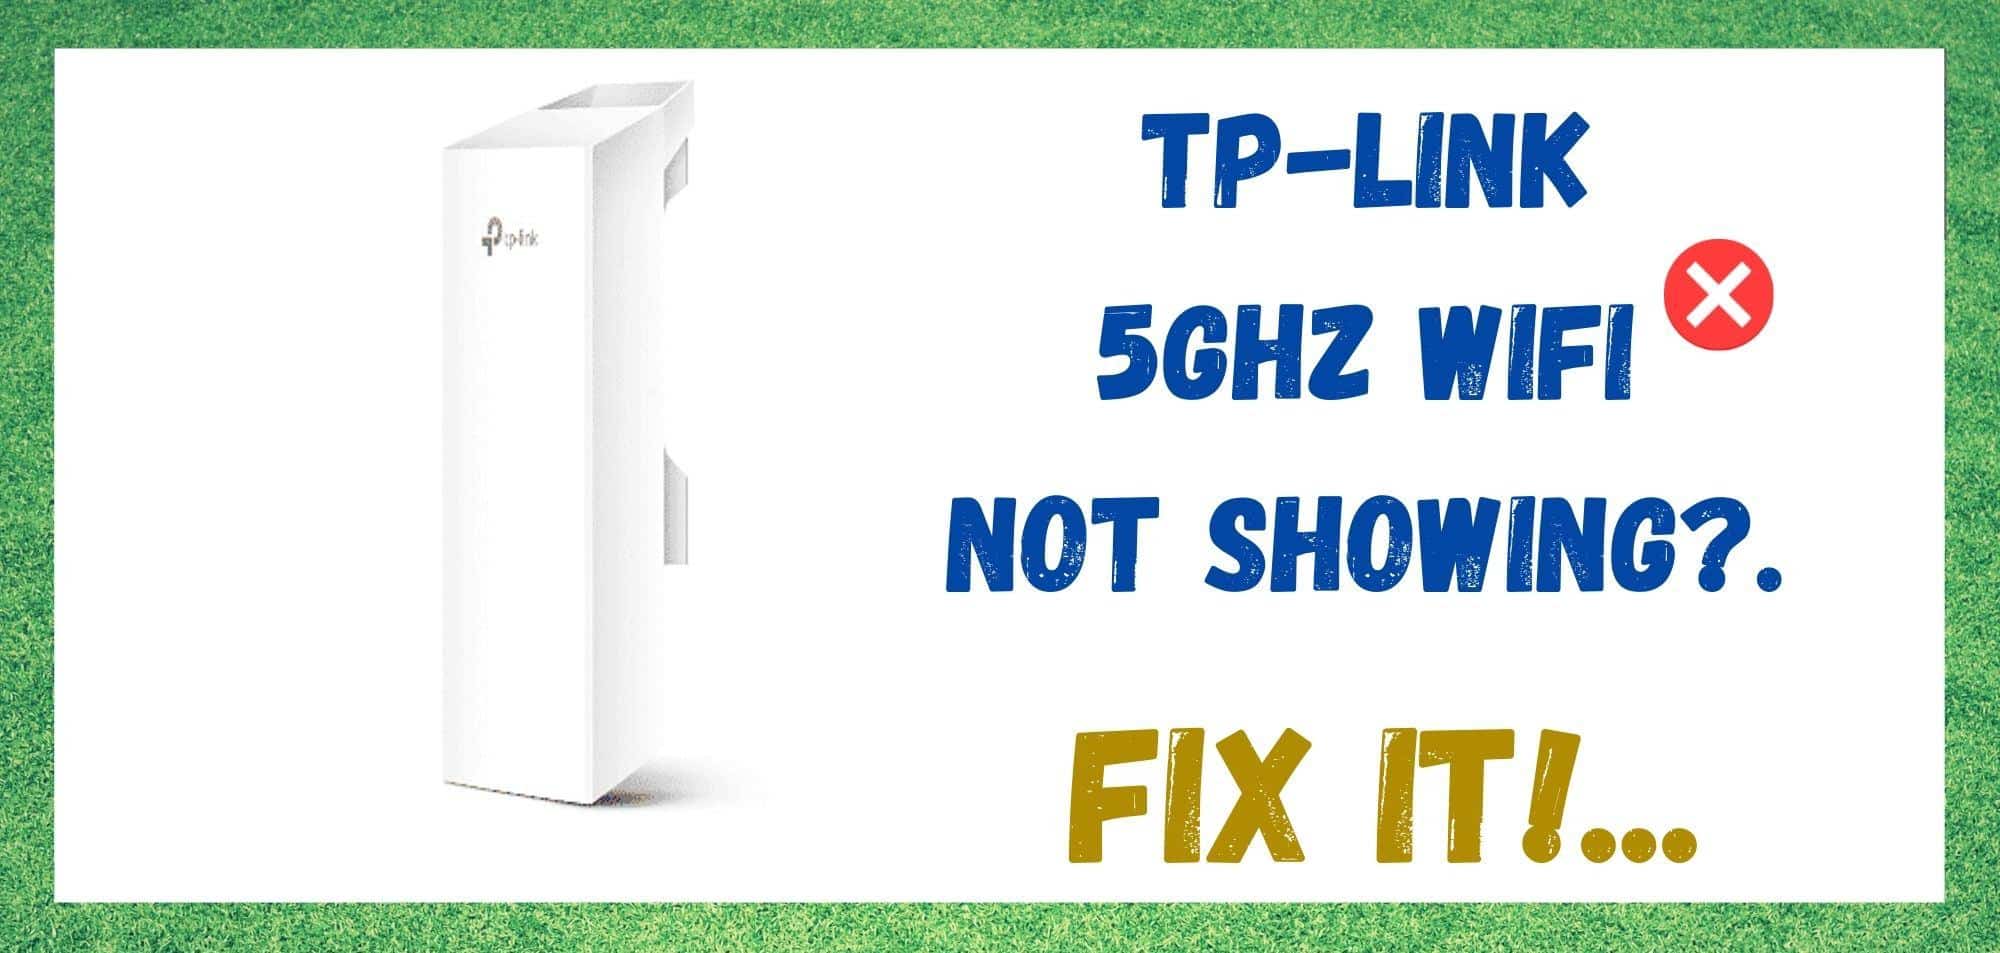 5 Cara Untuk Membetulkan WiFi 5GHz TP-Link Tidak Dipaparkan